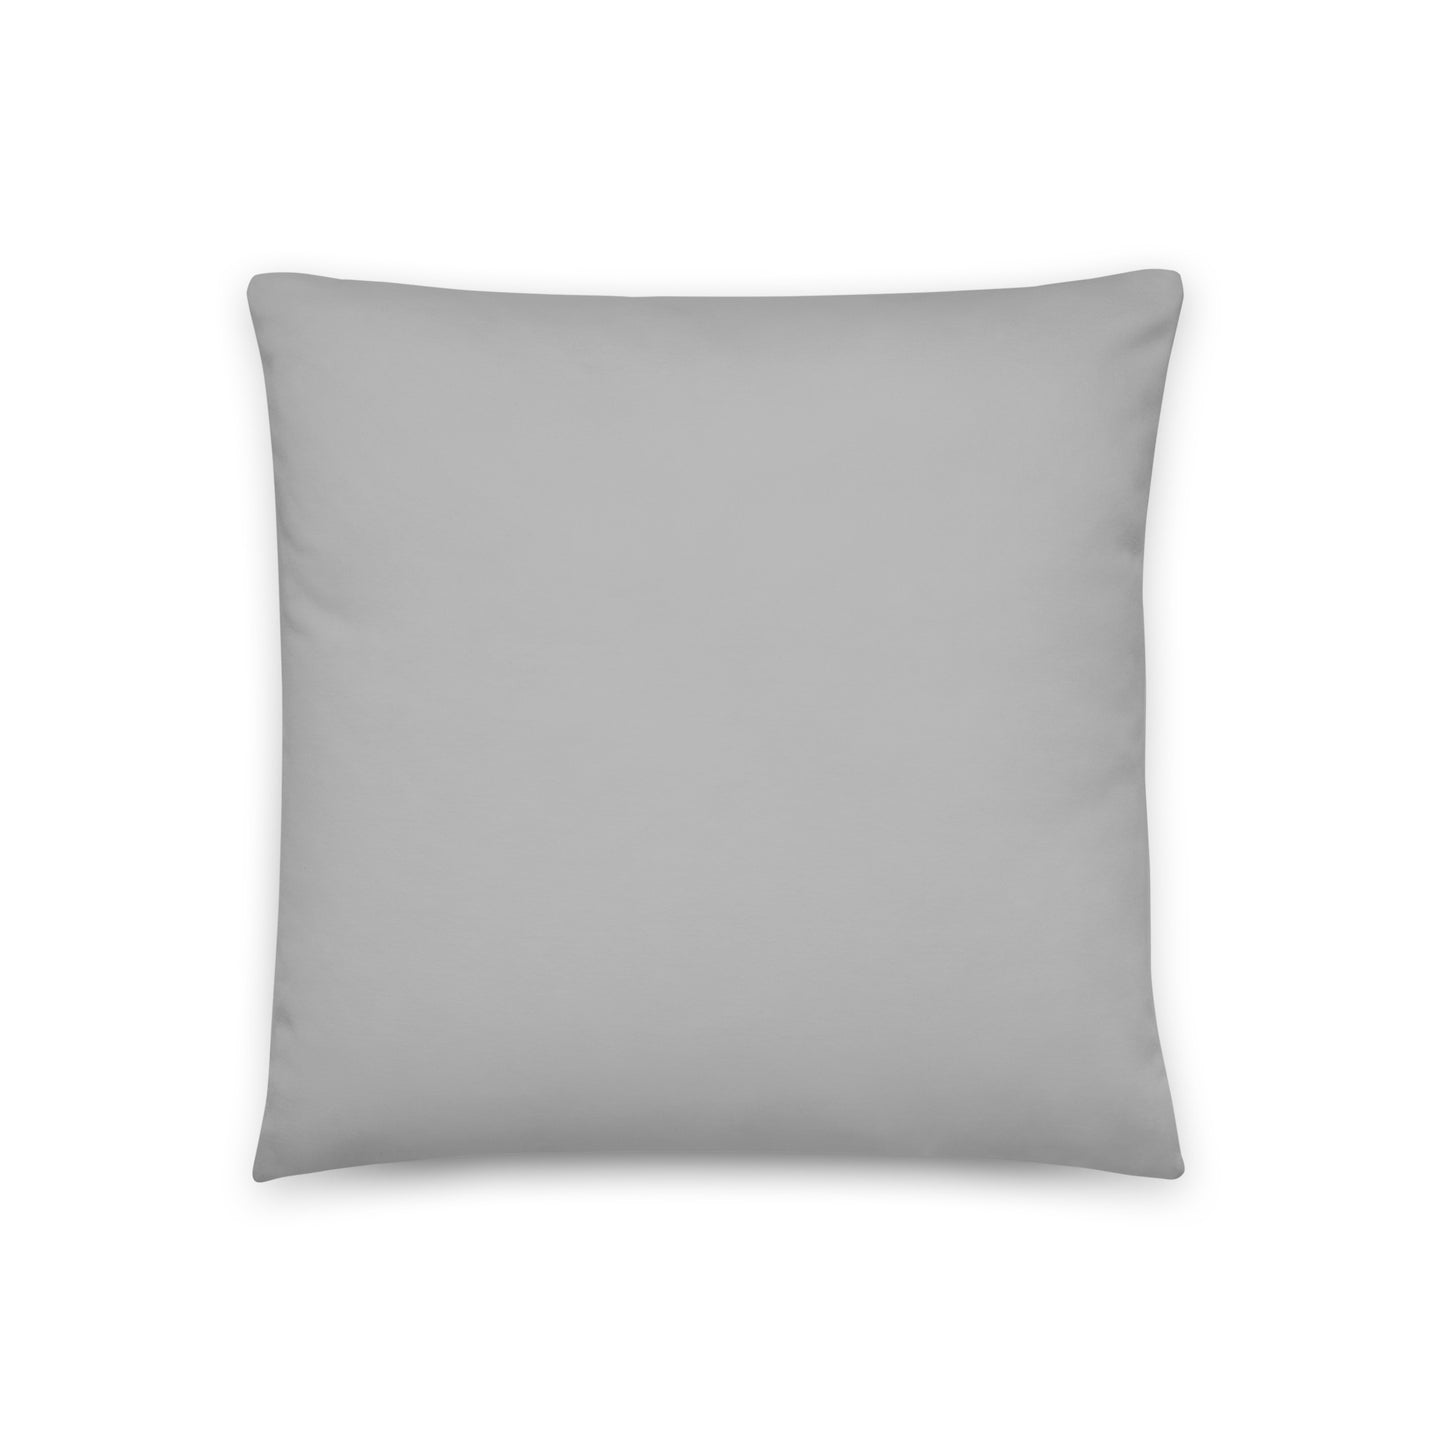 Kiara_TV- Basic Pillow - Year Of Kiara Edition